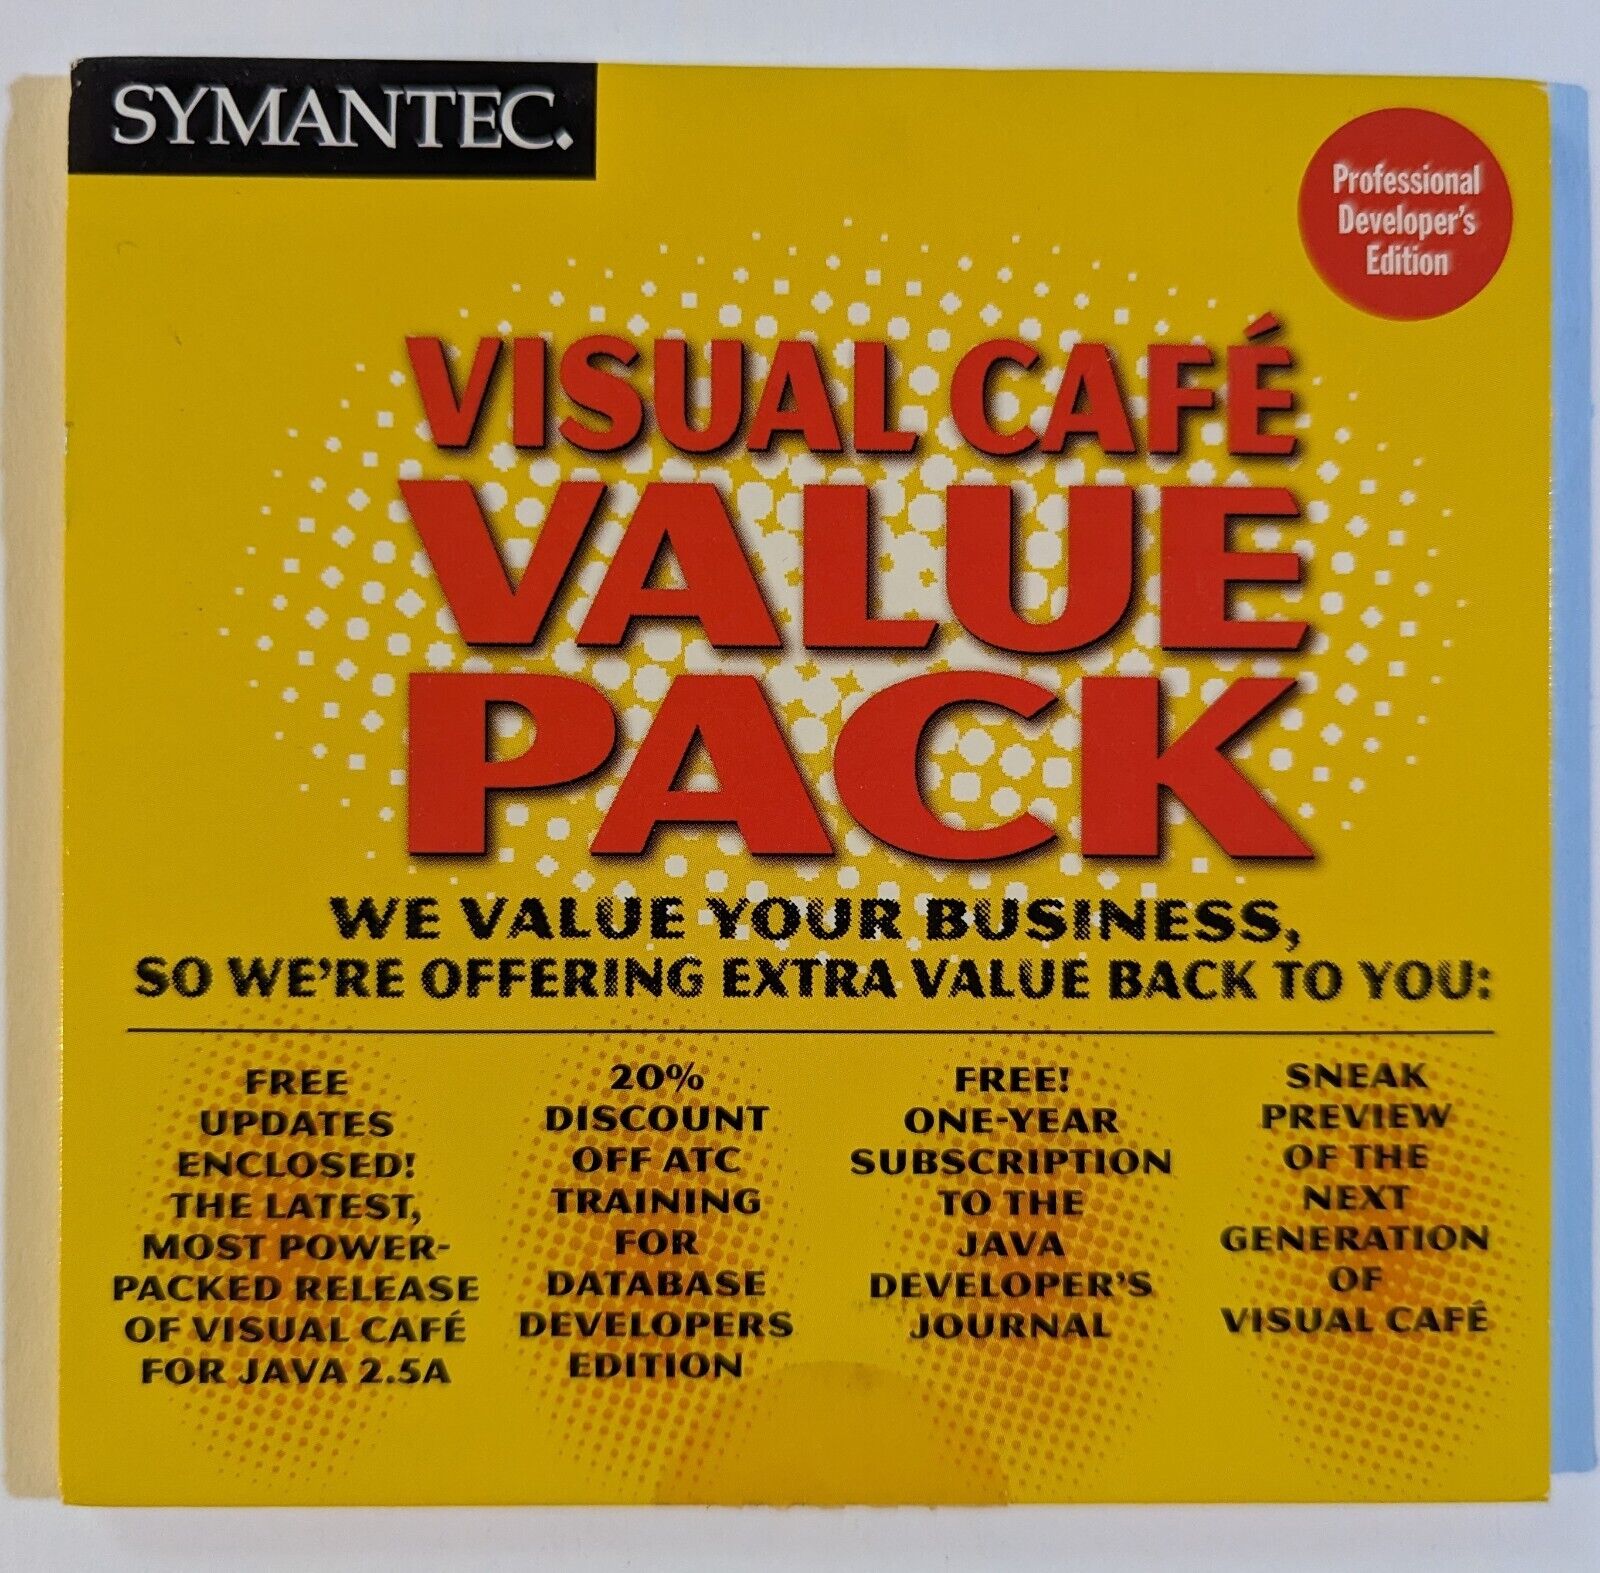 SYMANTEC Visual Cafe for Java - Value Pack for Professional Developer Ed. CD-ROM